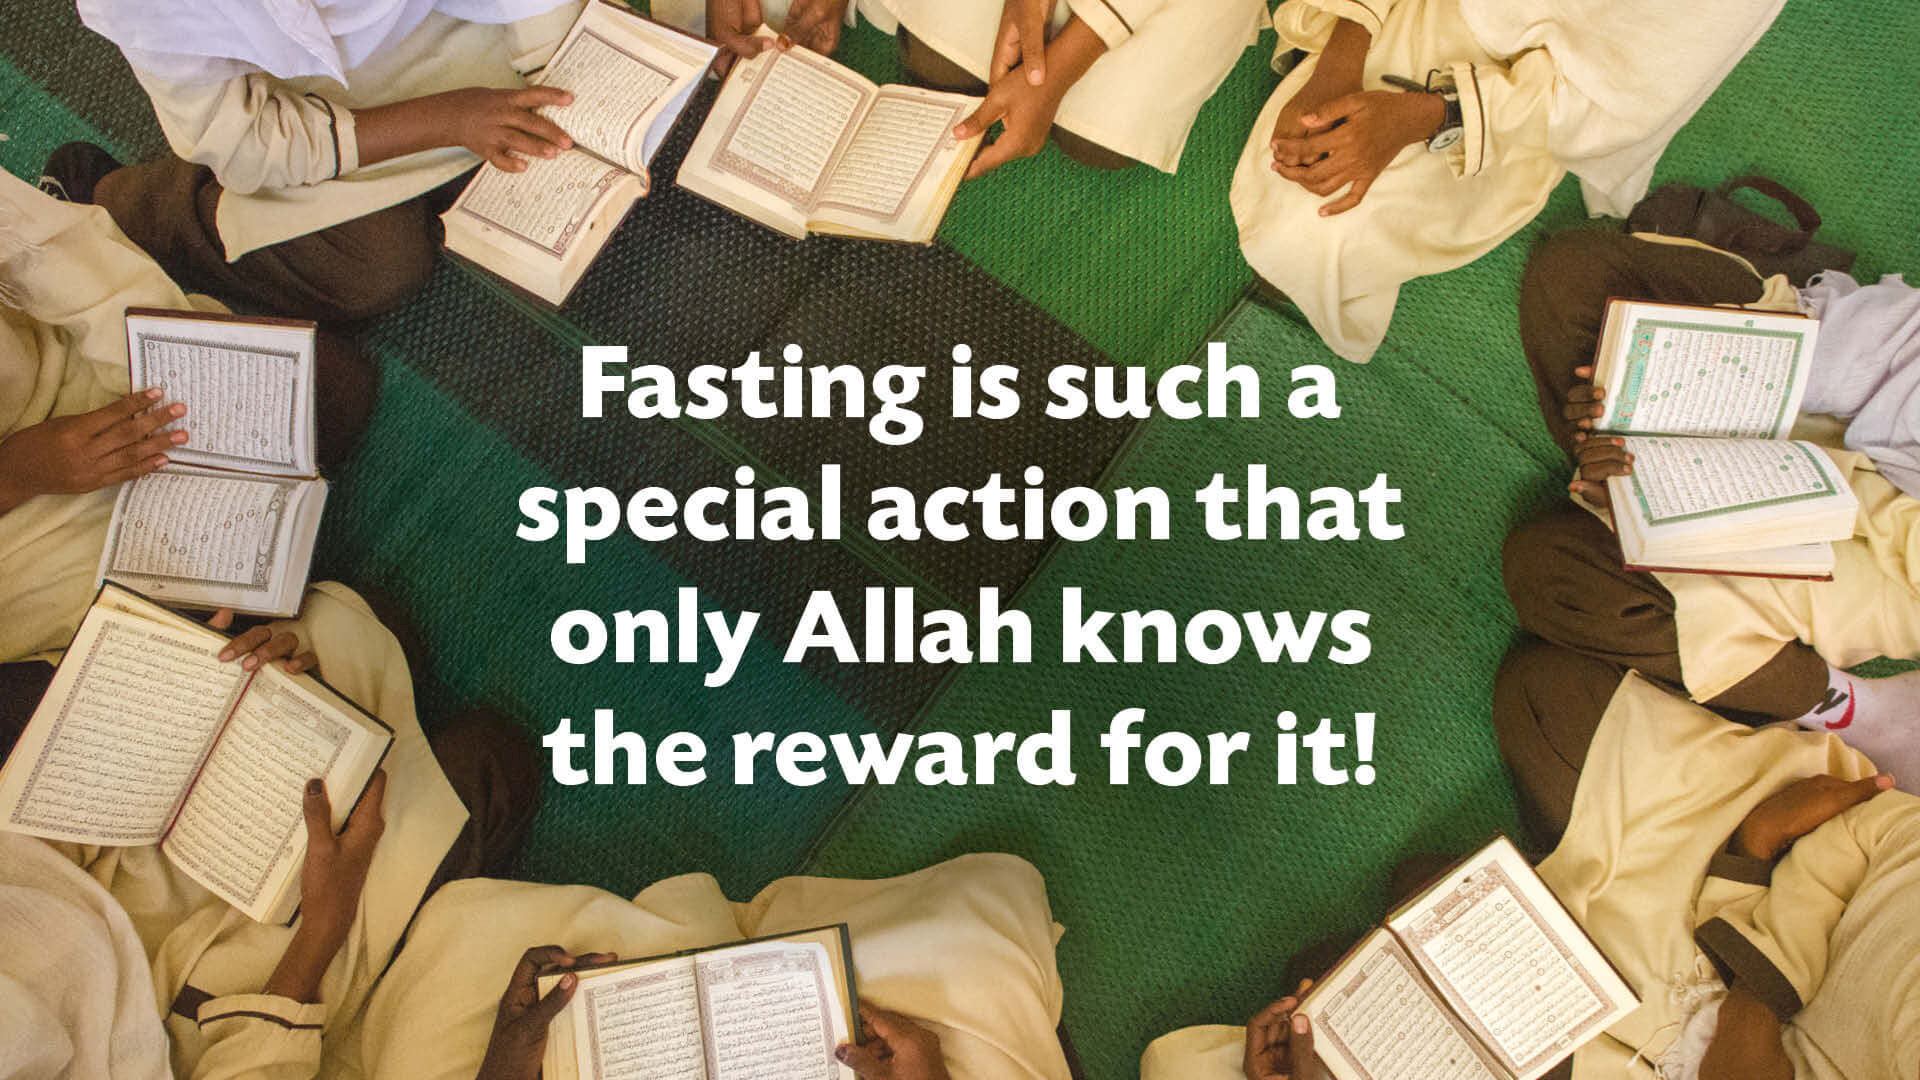 travel fasting islam